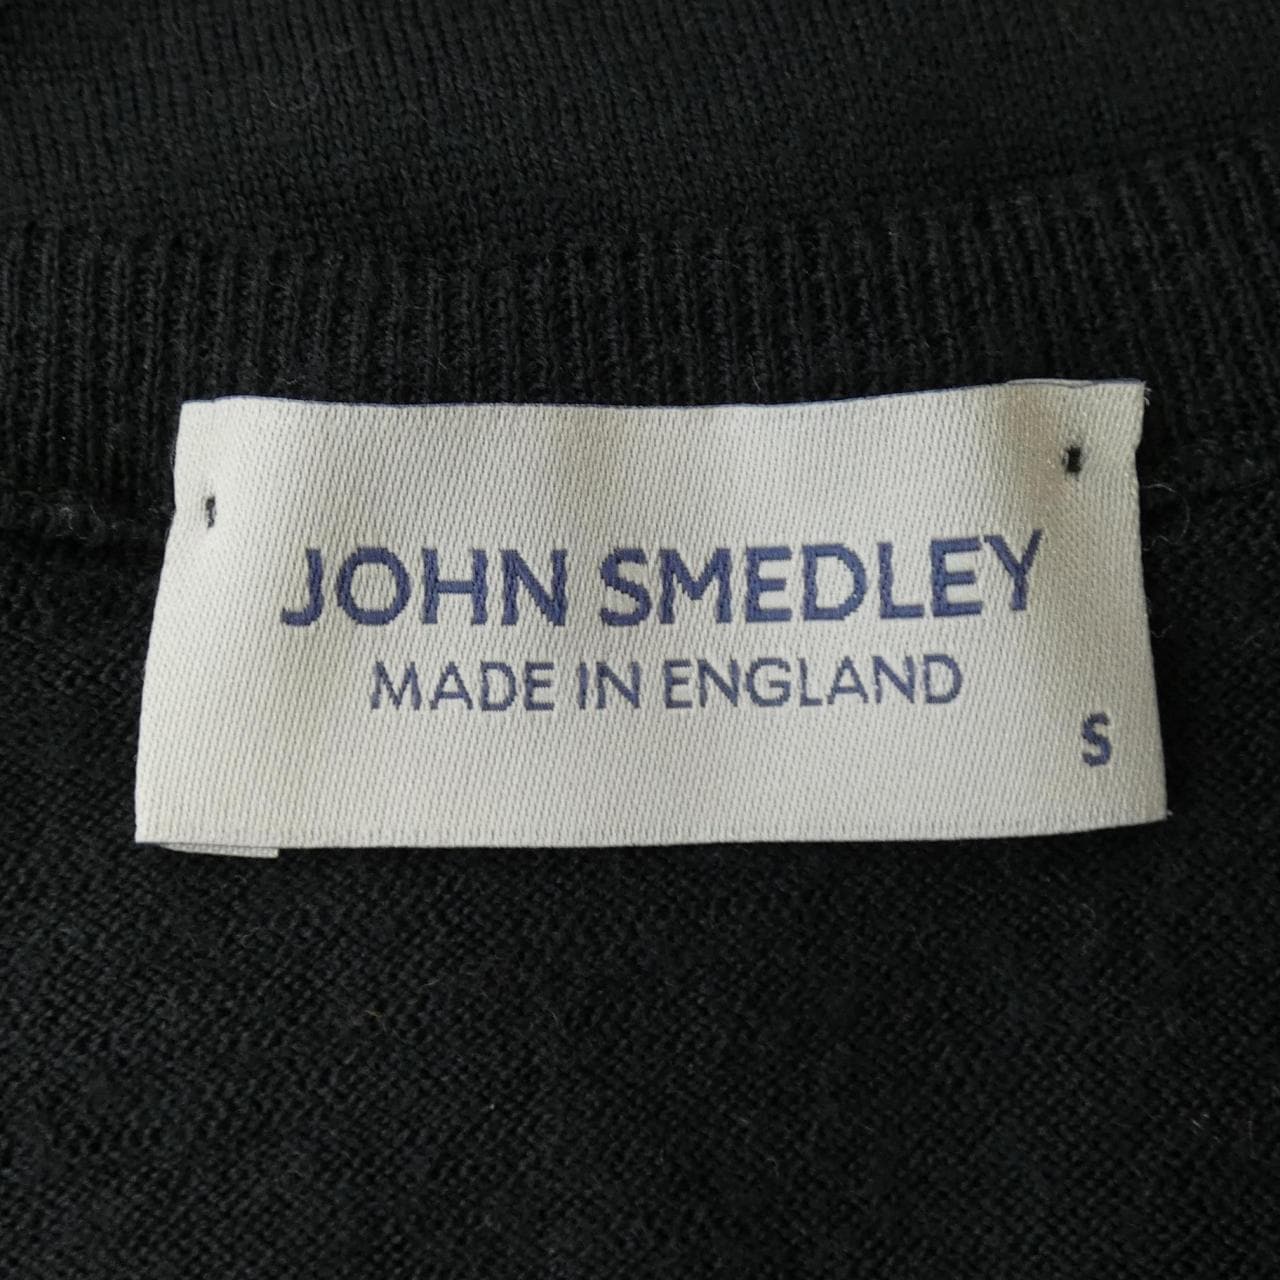 John Smedley JOHN SMEDLEY tops